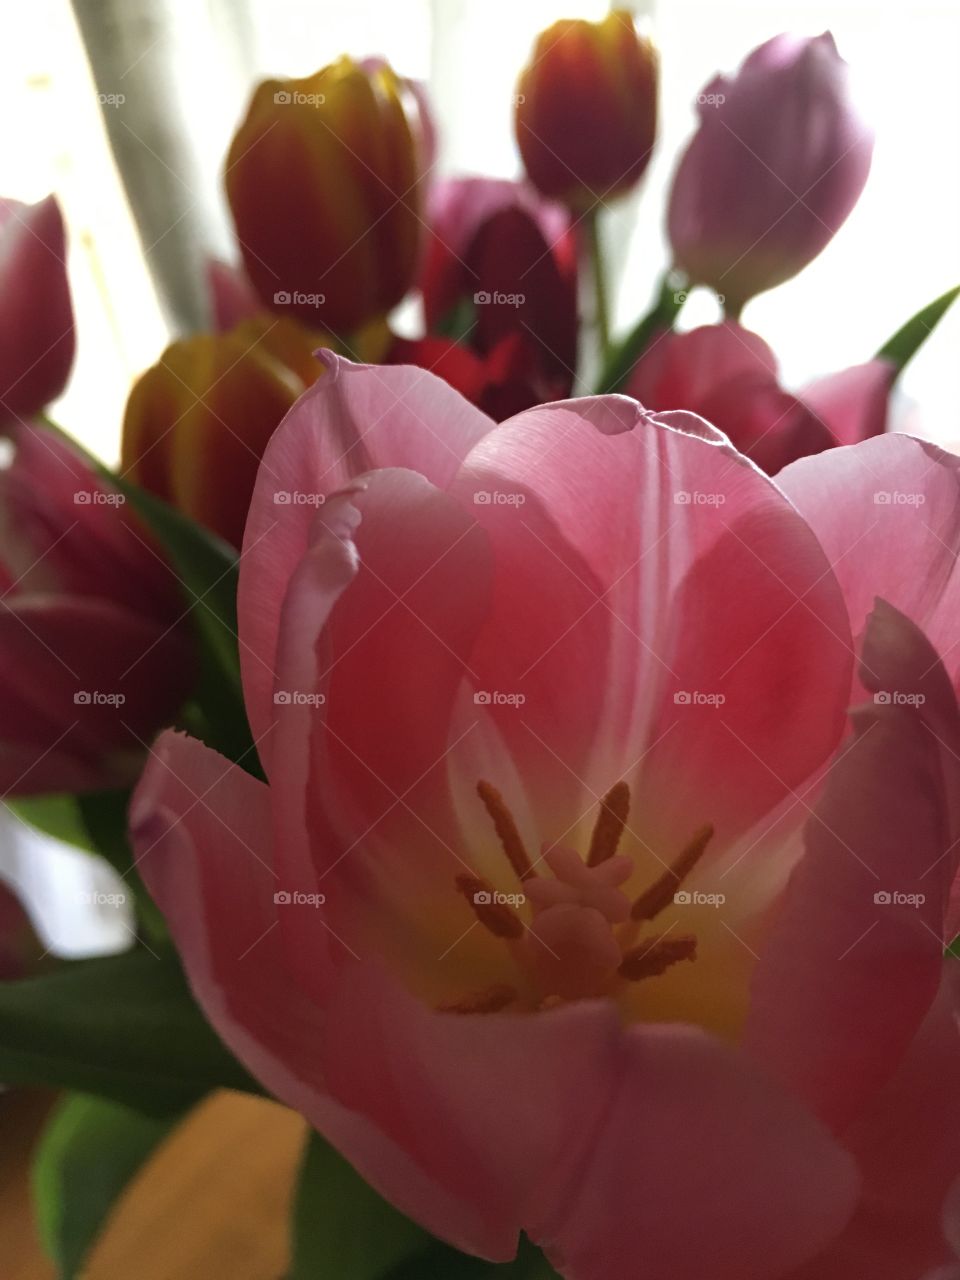 Tulips in bloom 